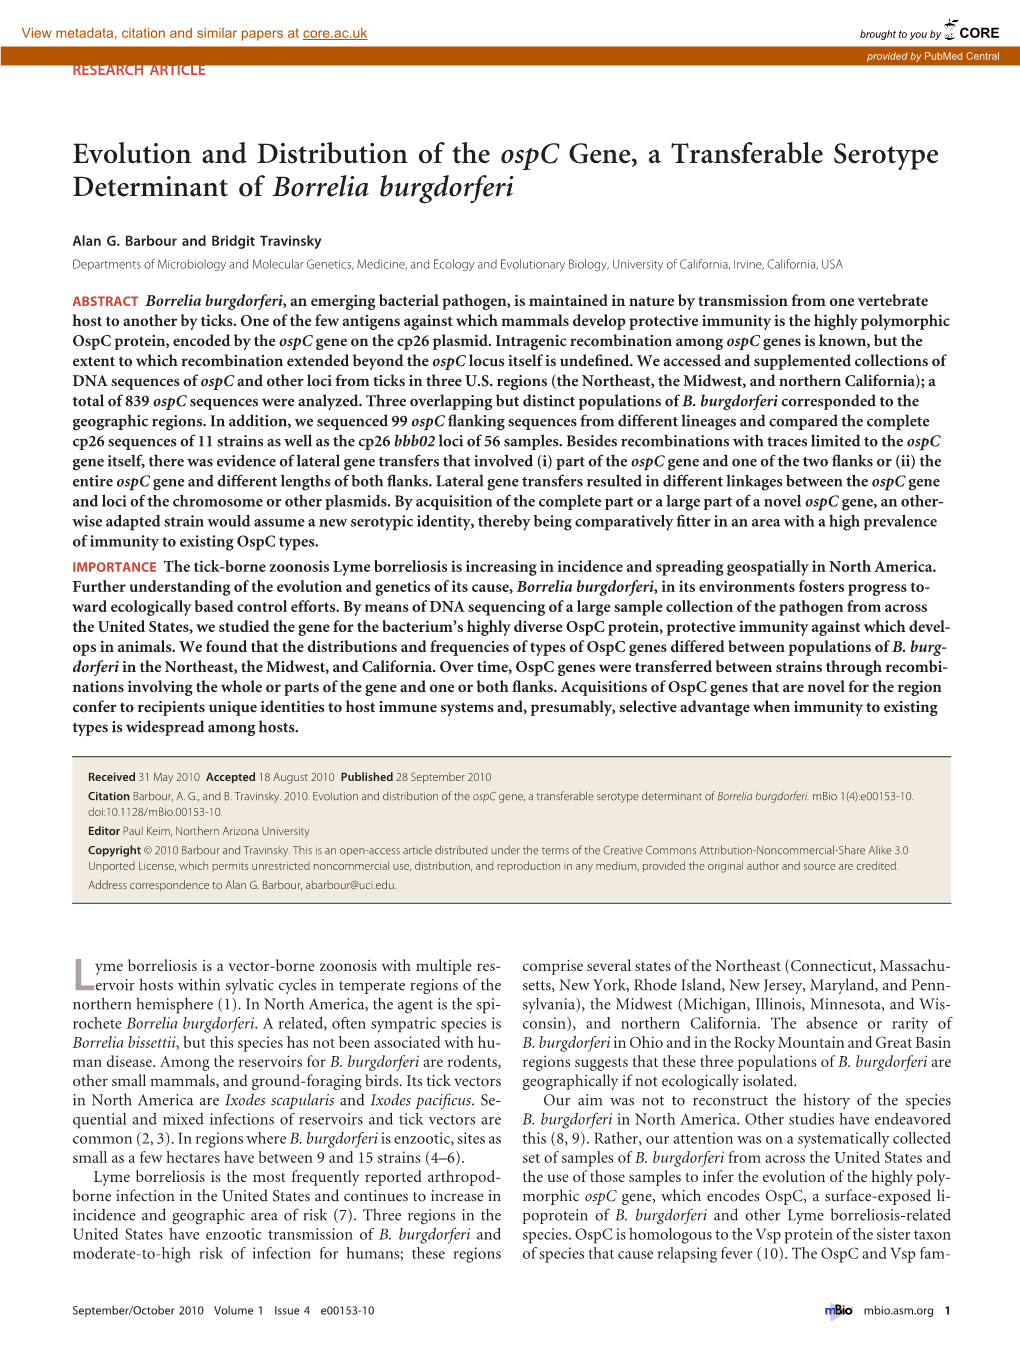 Evolution and Distribution of the Ospc Gene, a Transferable Serotype Determinant of Borrelia Burgdorferi